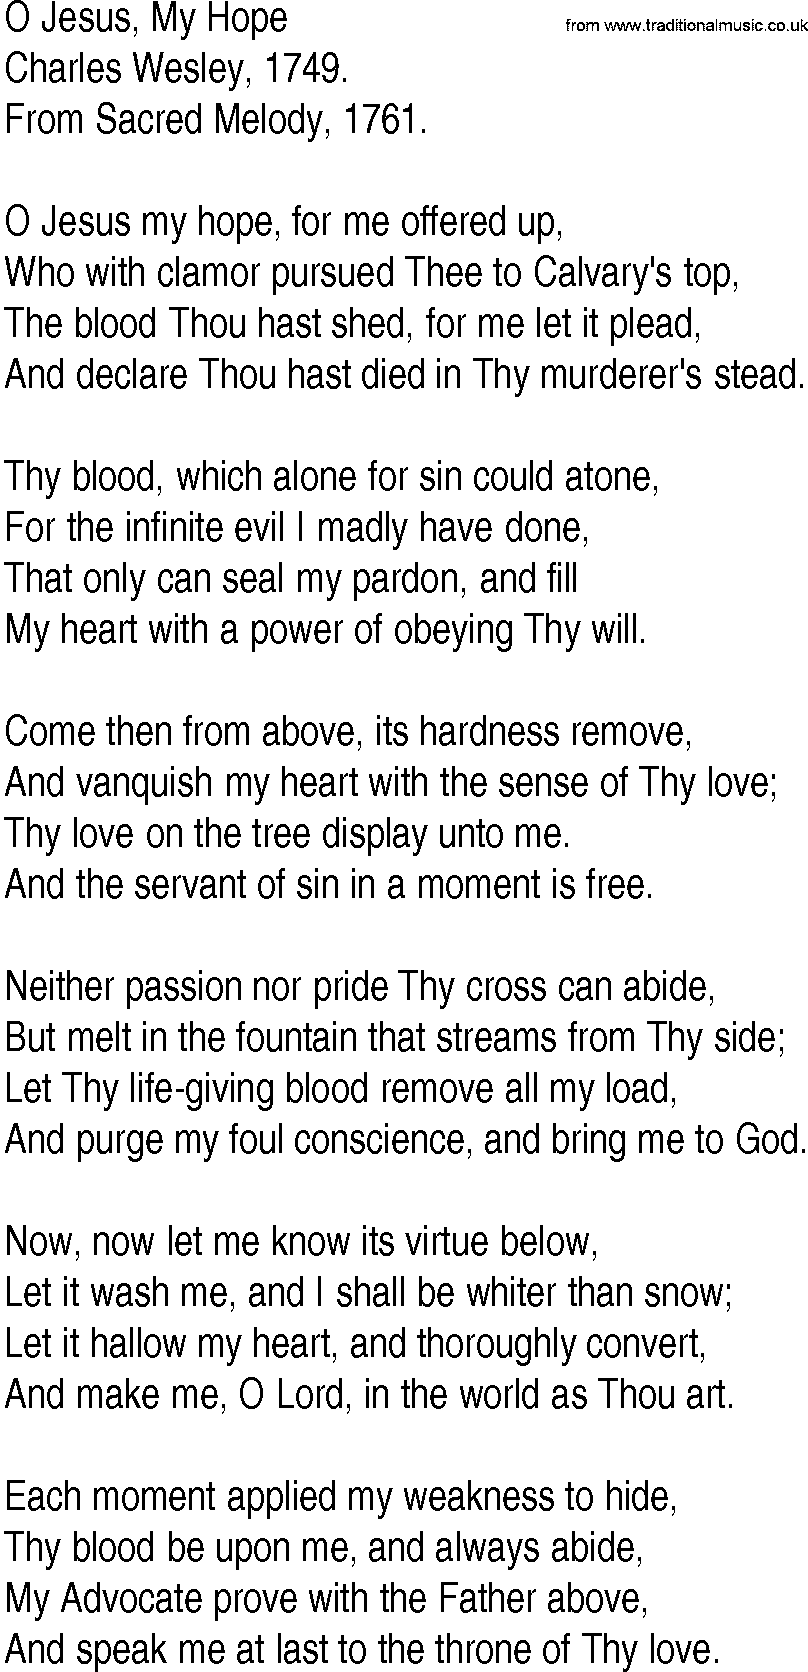 Hymn and Gospel Song: O Jesus, My Hope by Charles Wesley lyrics